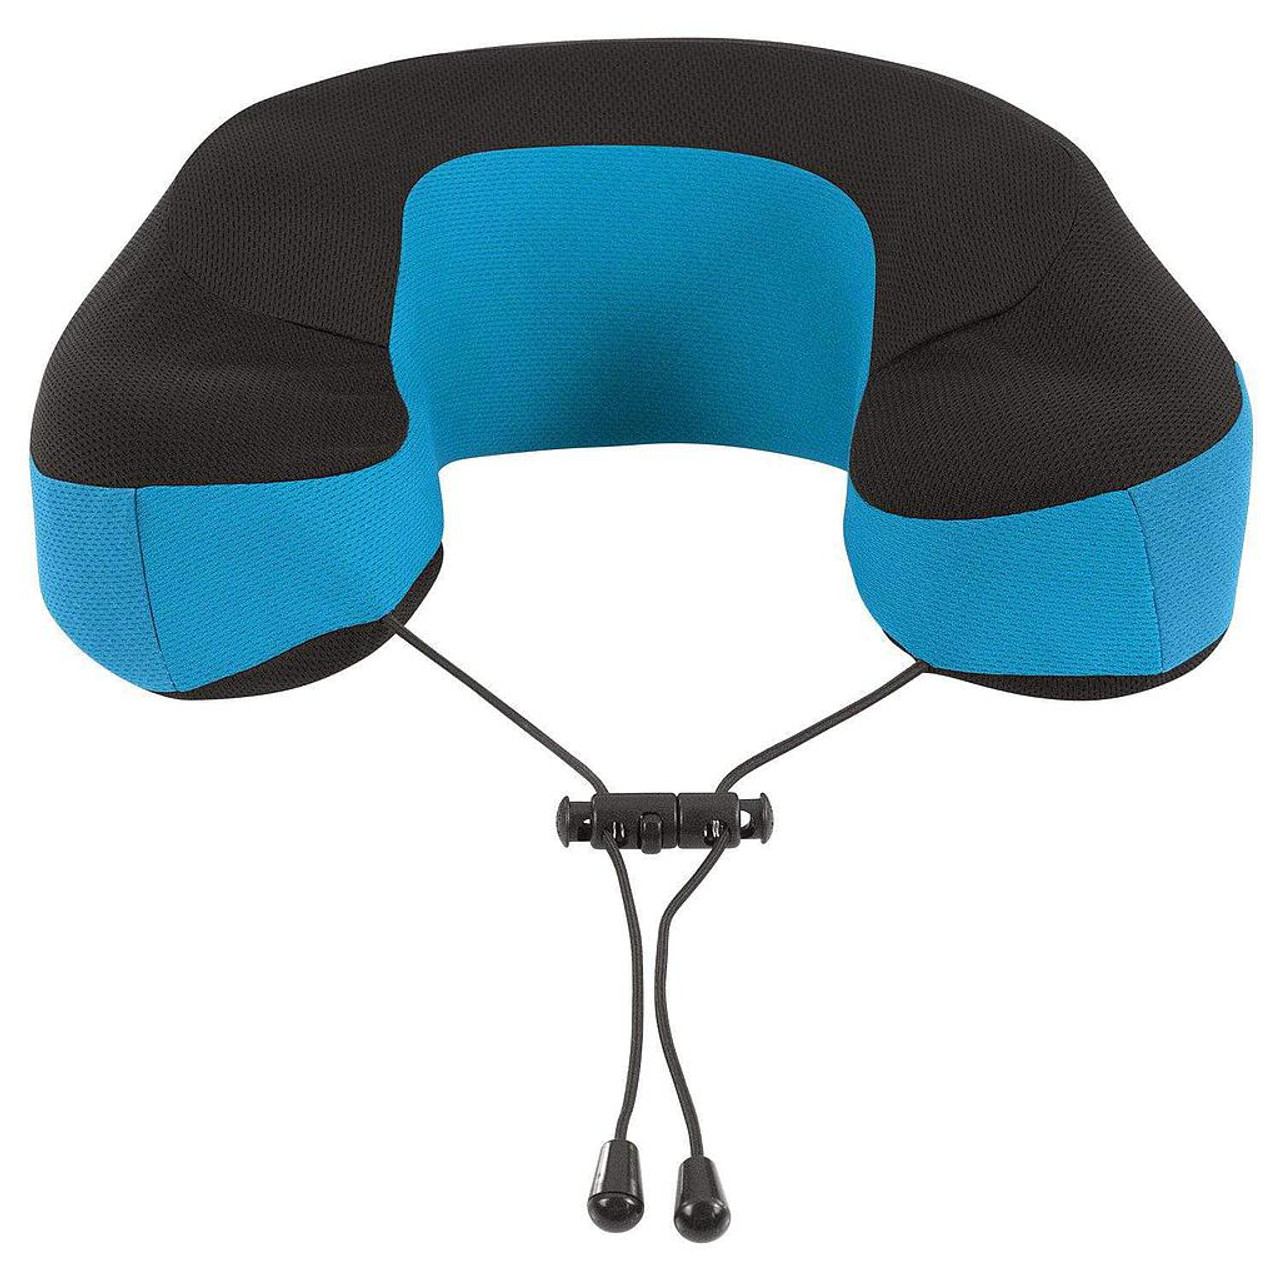 Inflatable Leg Rest Pillow - Vive Health